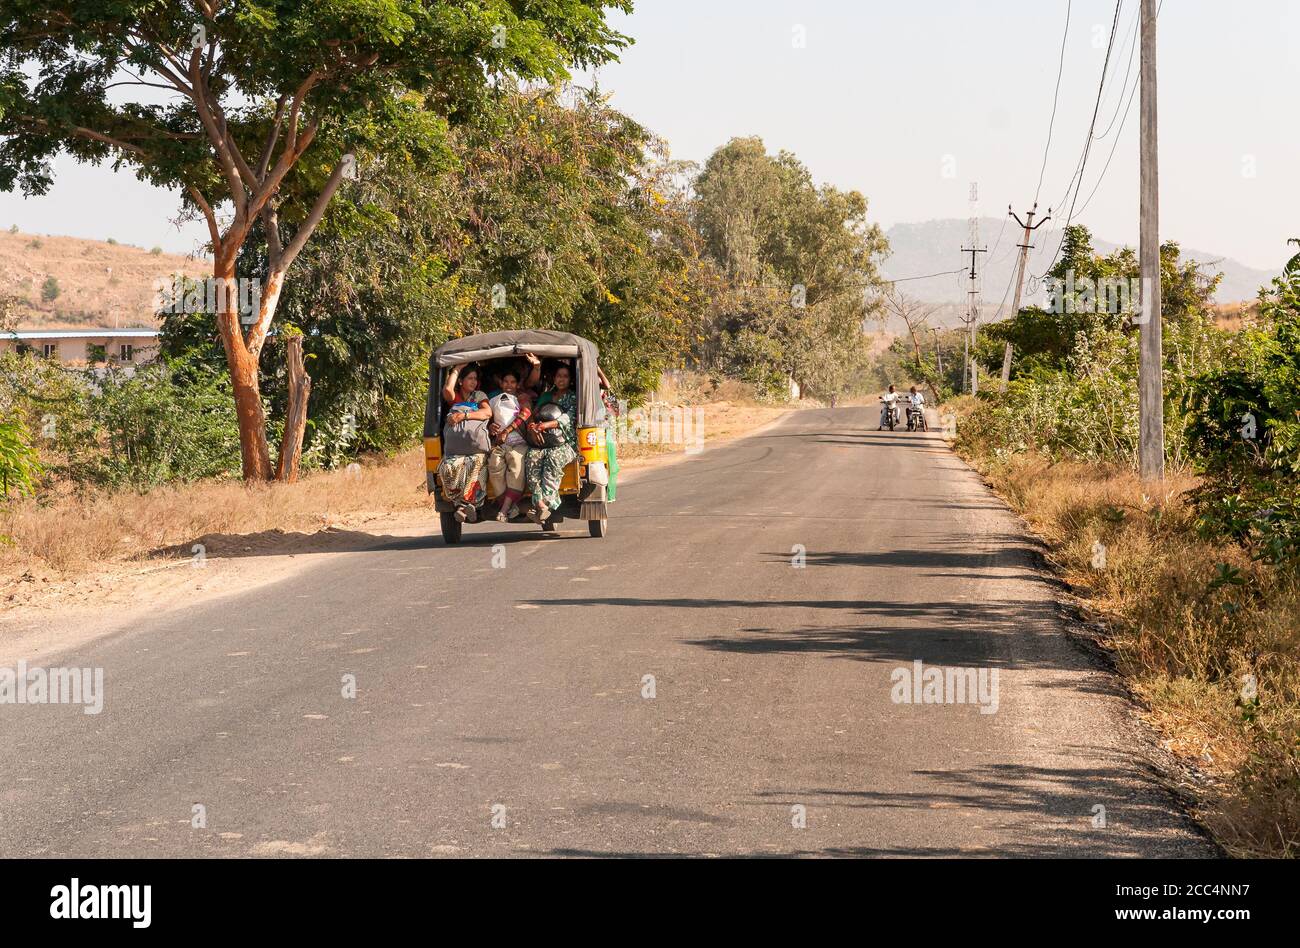 Puttaparthi, Andhra Pradesh, India - January 12, 2013: Indian women travel in rickshaw taxi along the road of Puttaparthi village, India Stock Photo